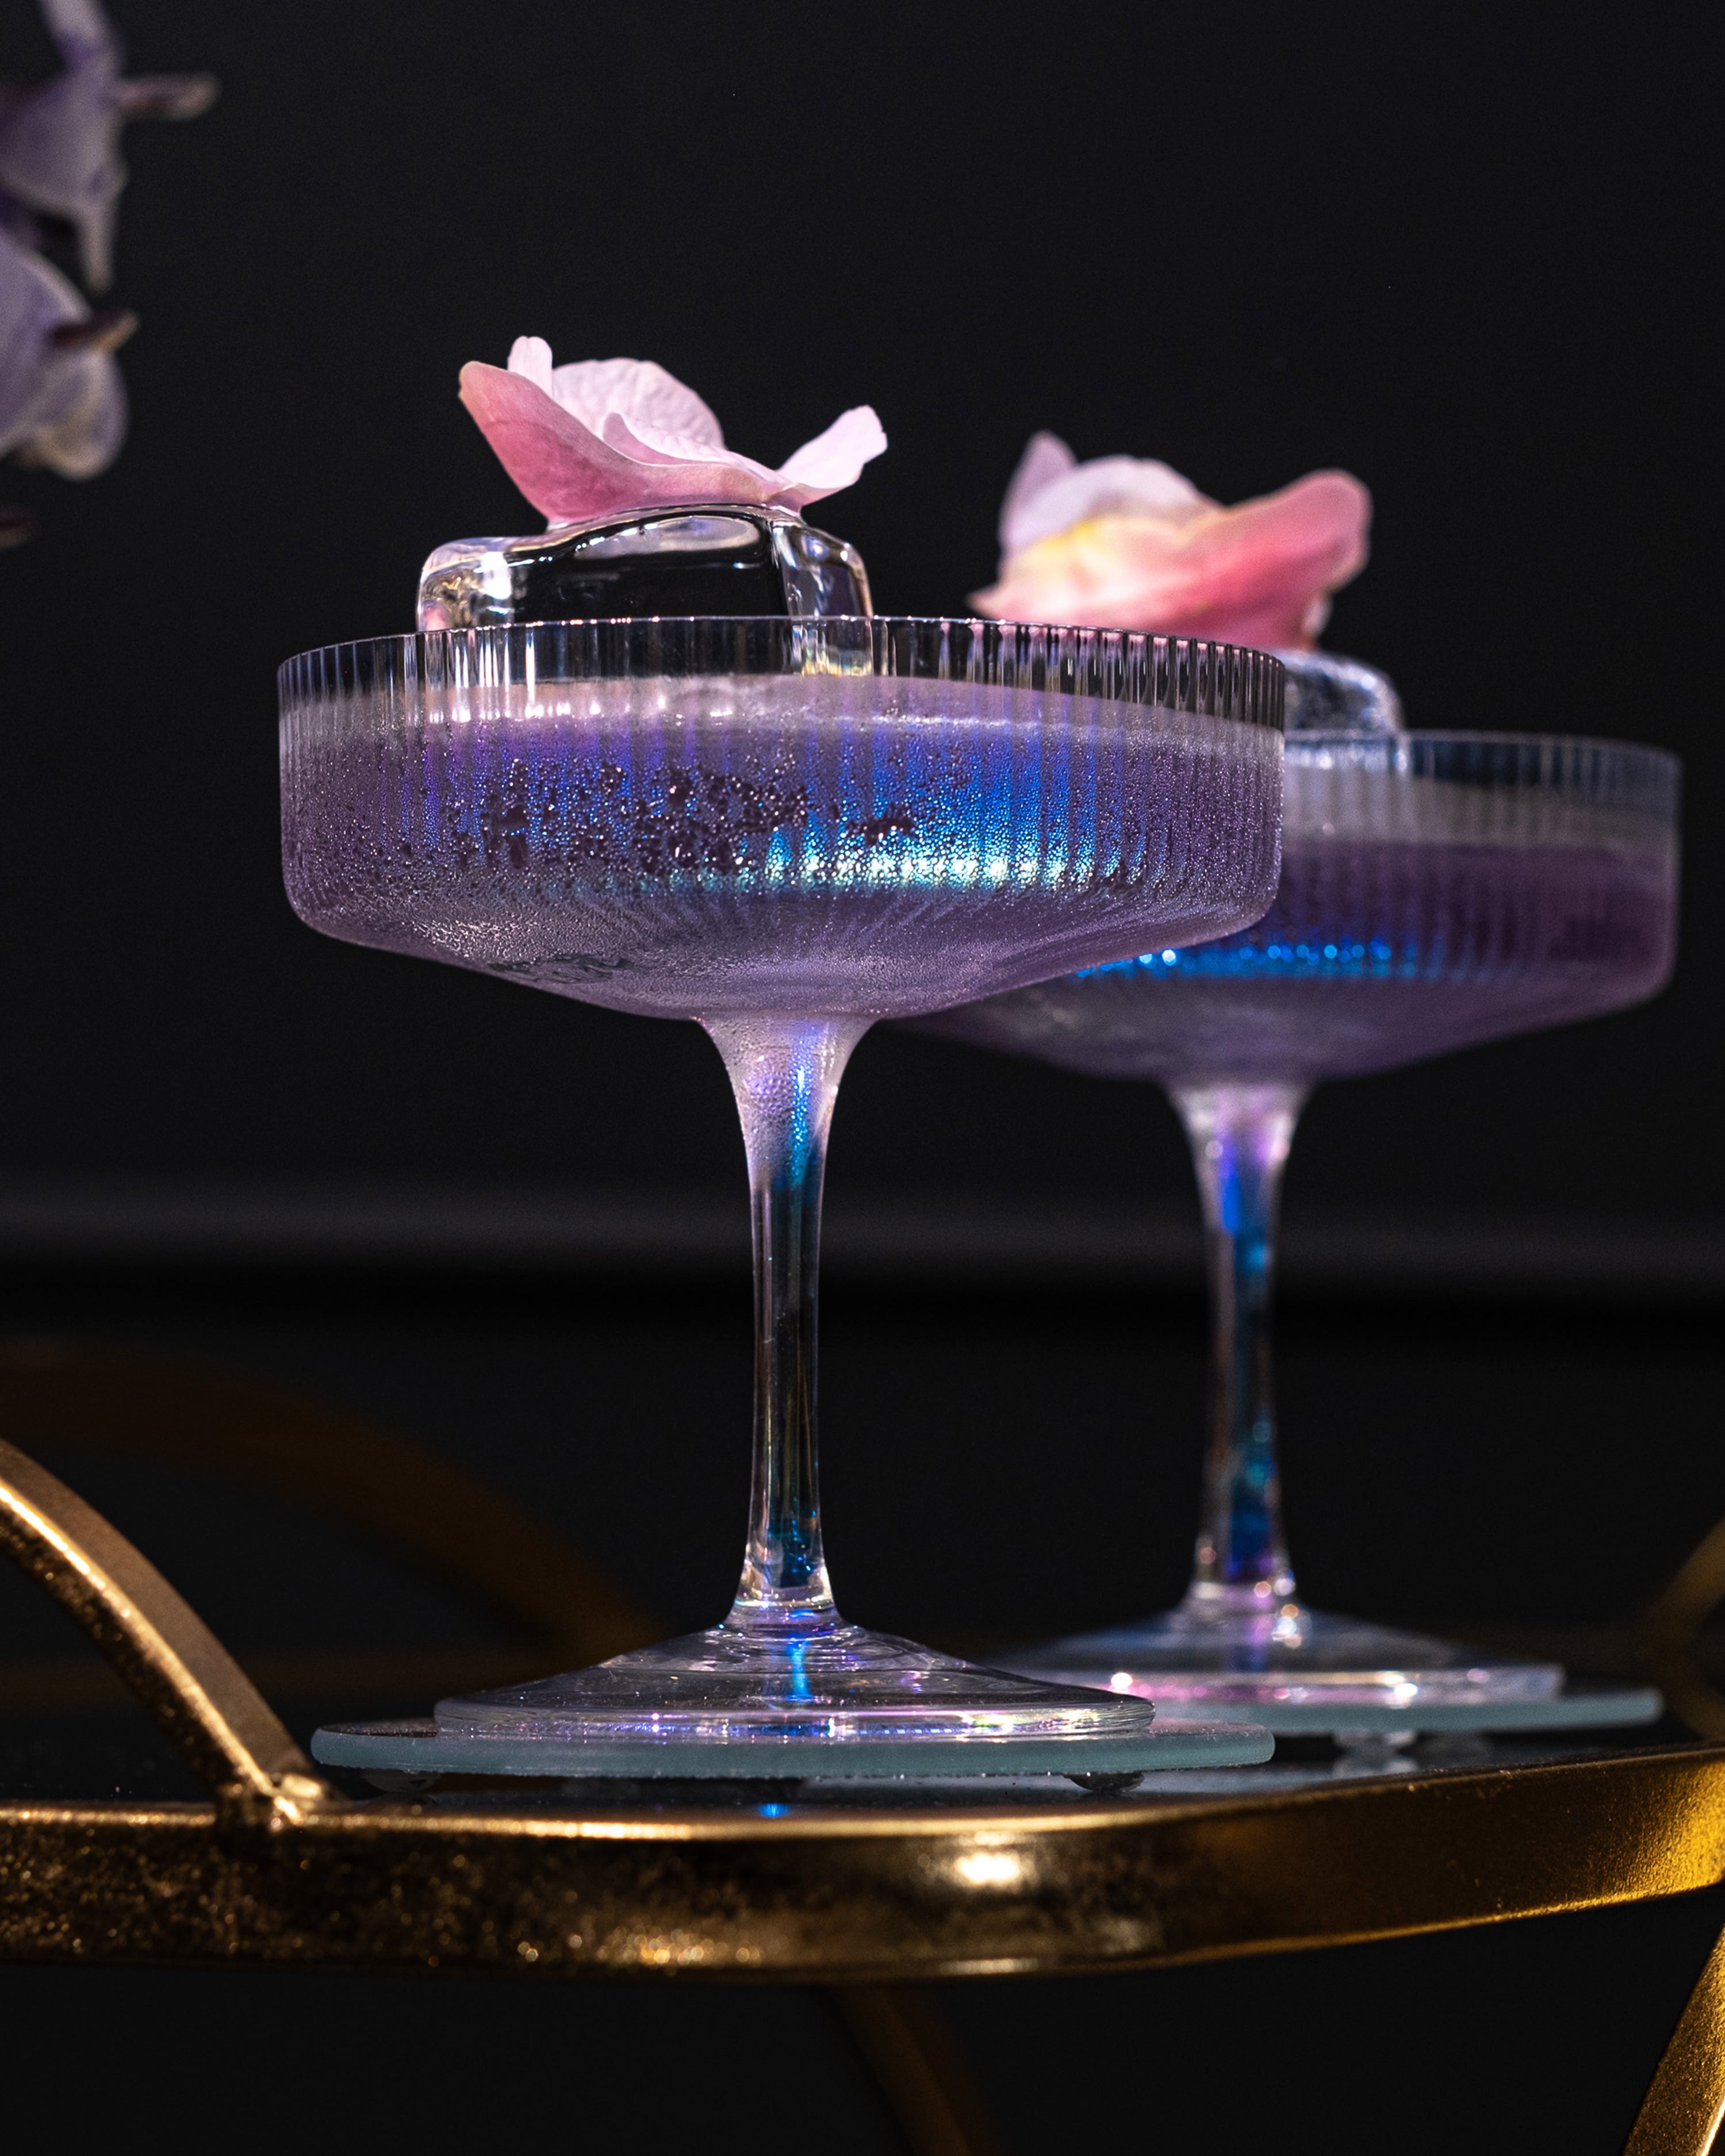 Vintage Art Deco Collins Ribbed Cocktail Glasses | Set of 4 | 14 oz Crystal  Highball Glassware for D…See more Vintage Art Deco Collins Ribbed Cocktail